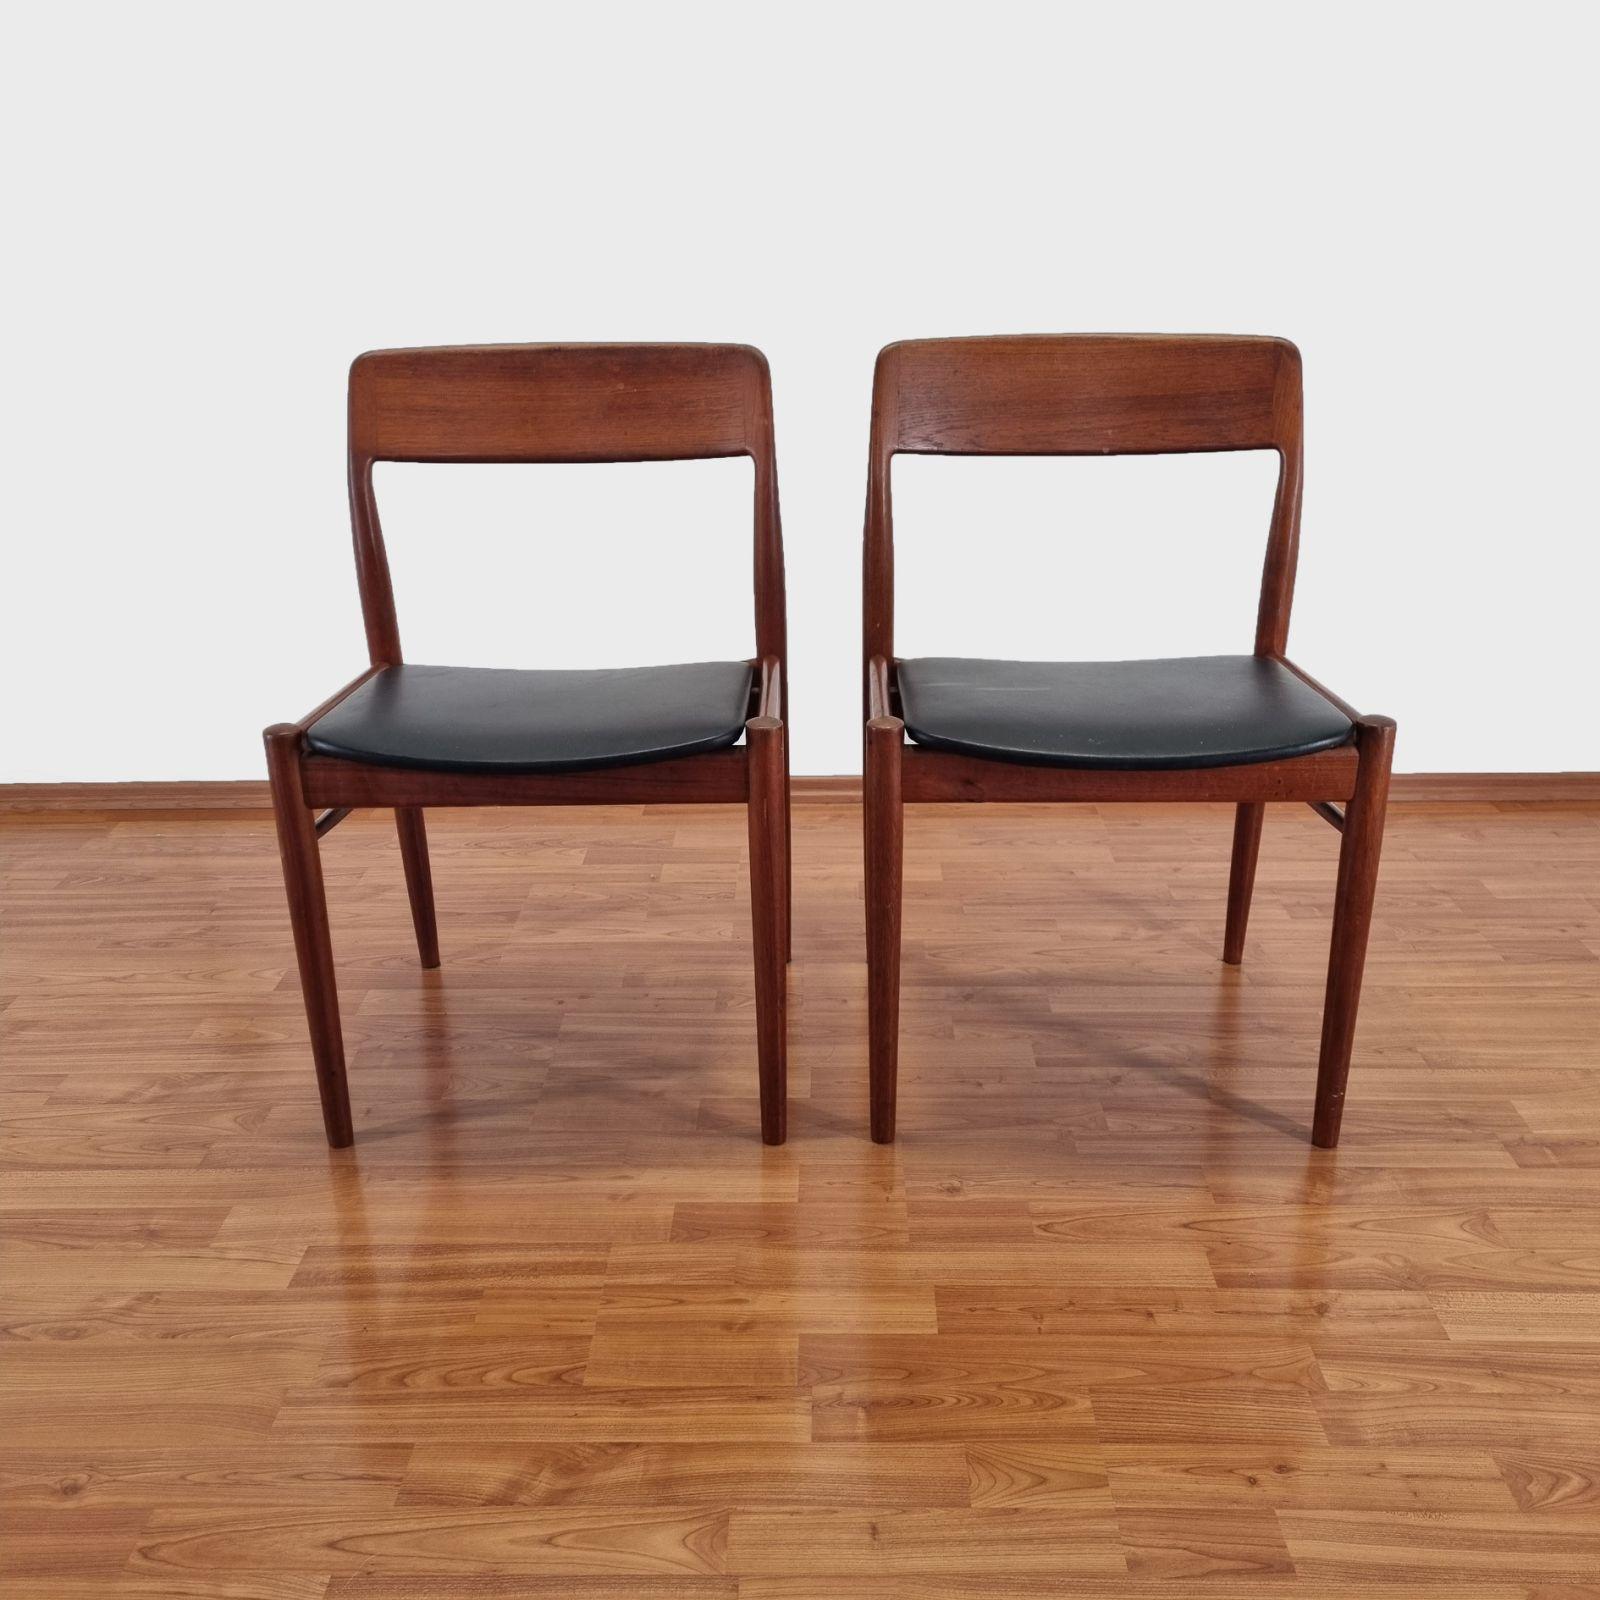 Scandinavian Modern Teak Dining Chairs, Design By Niels Otto Möller, Denmark 60s For Sale 2